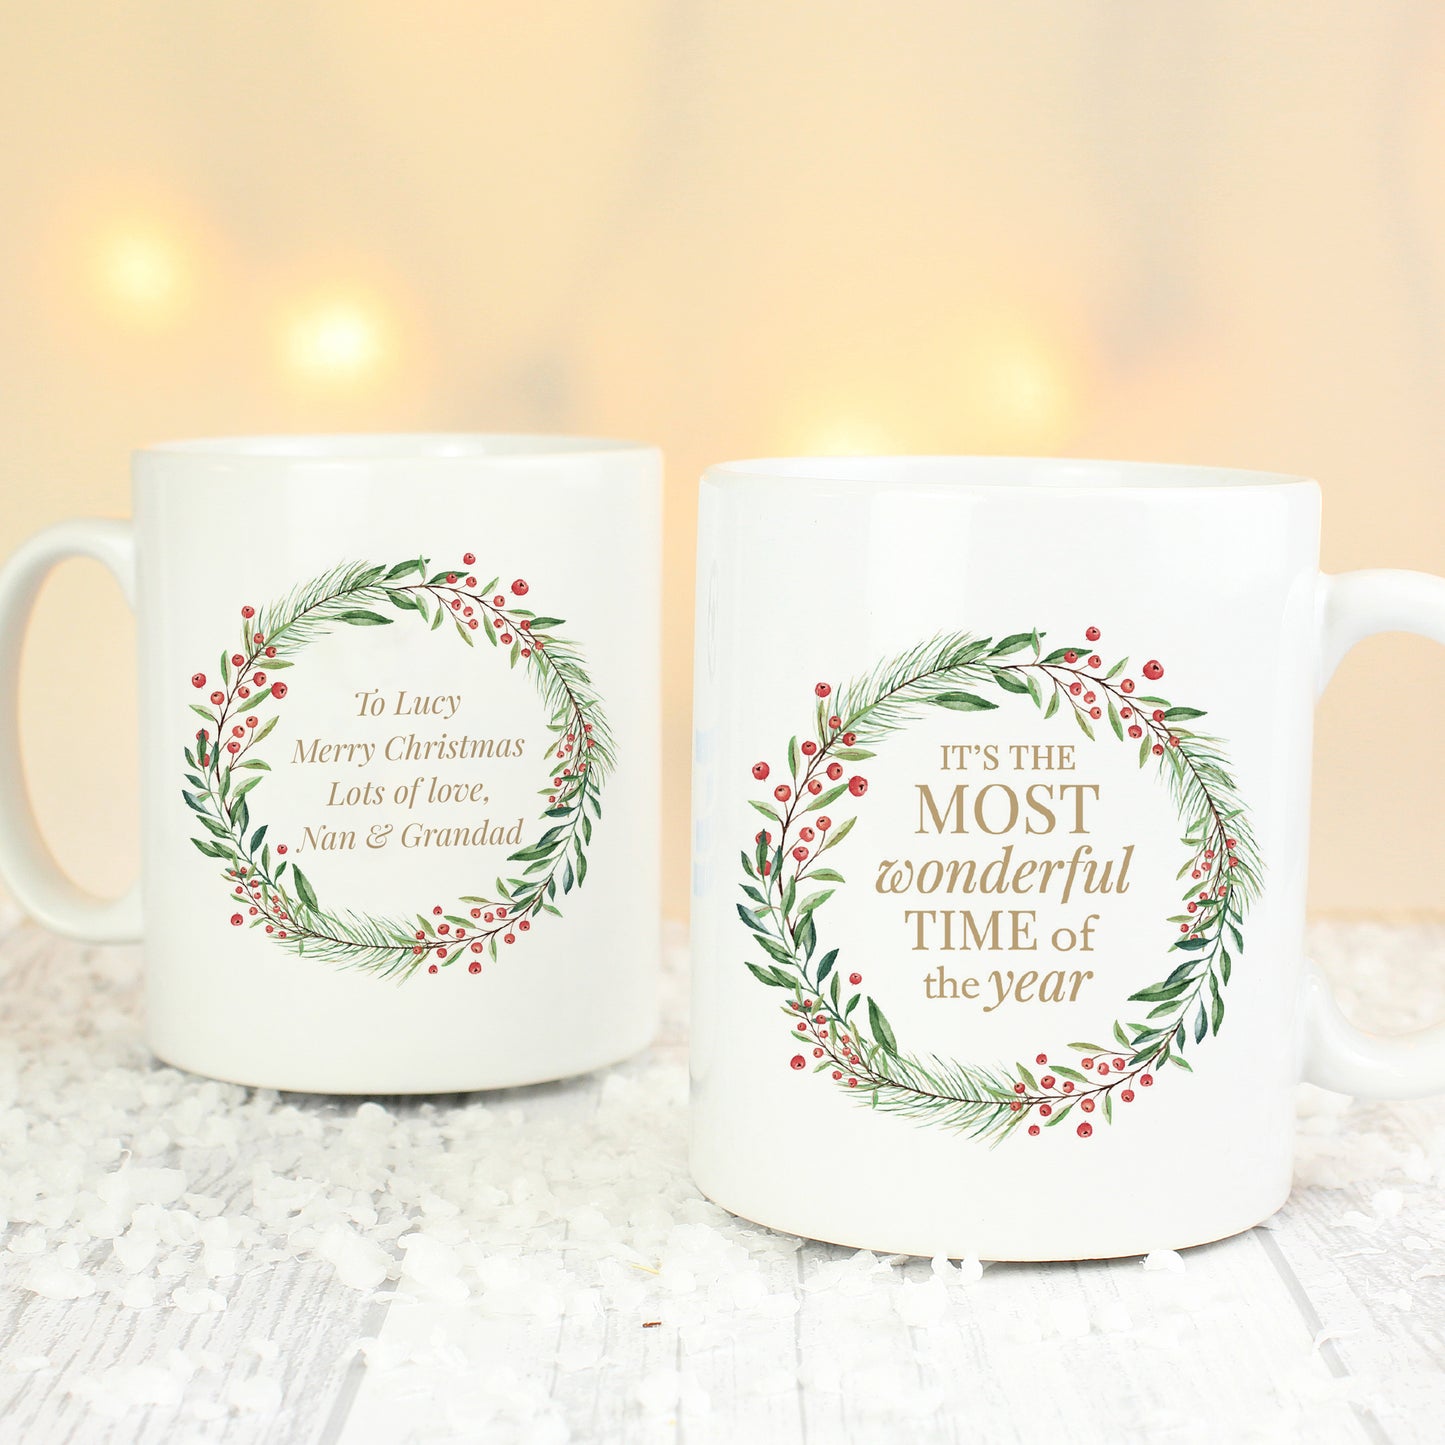 Personalised 'Wonderful Time of The Year' Christmas Mug - Personalise It!